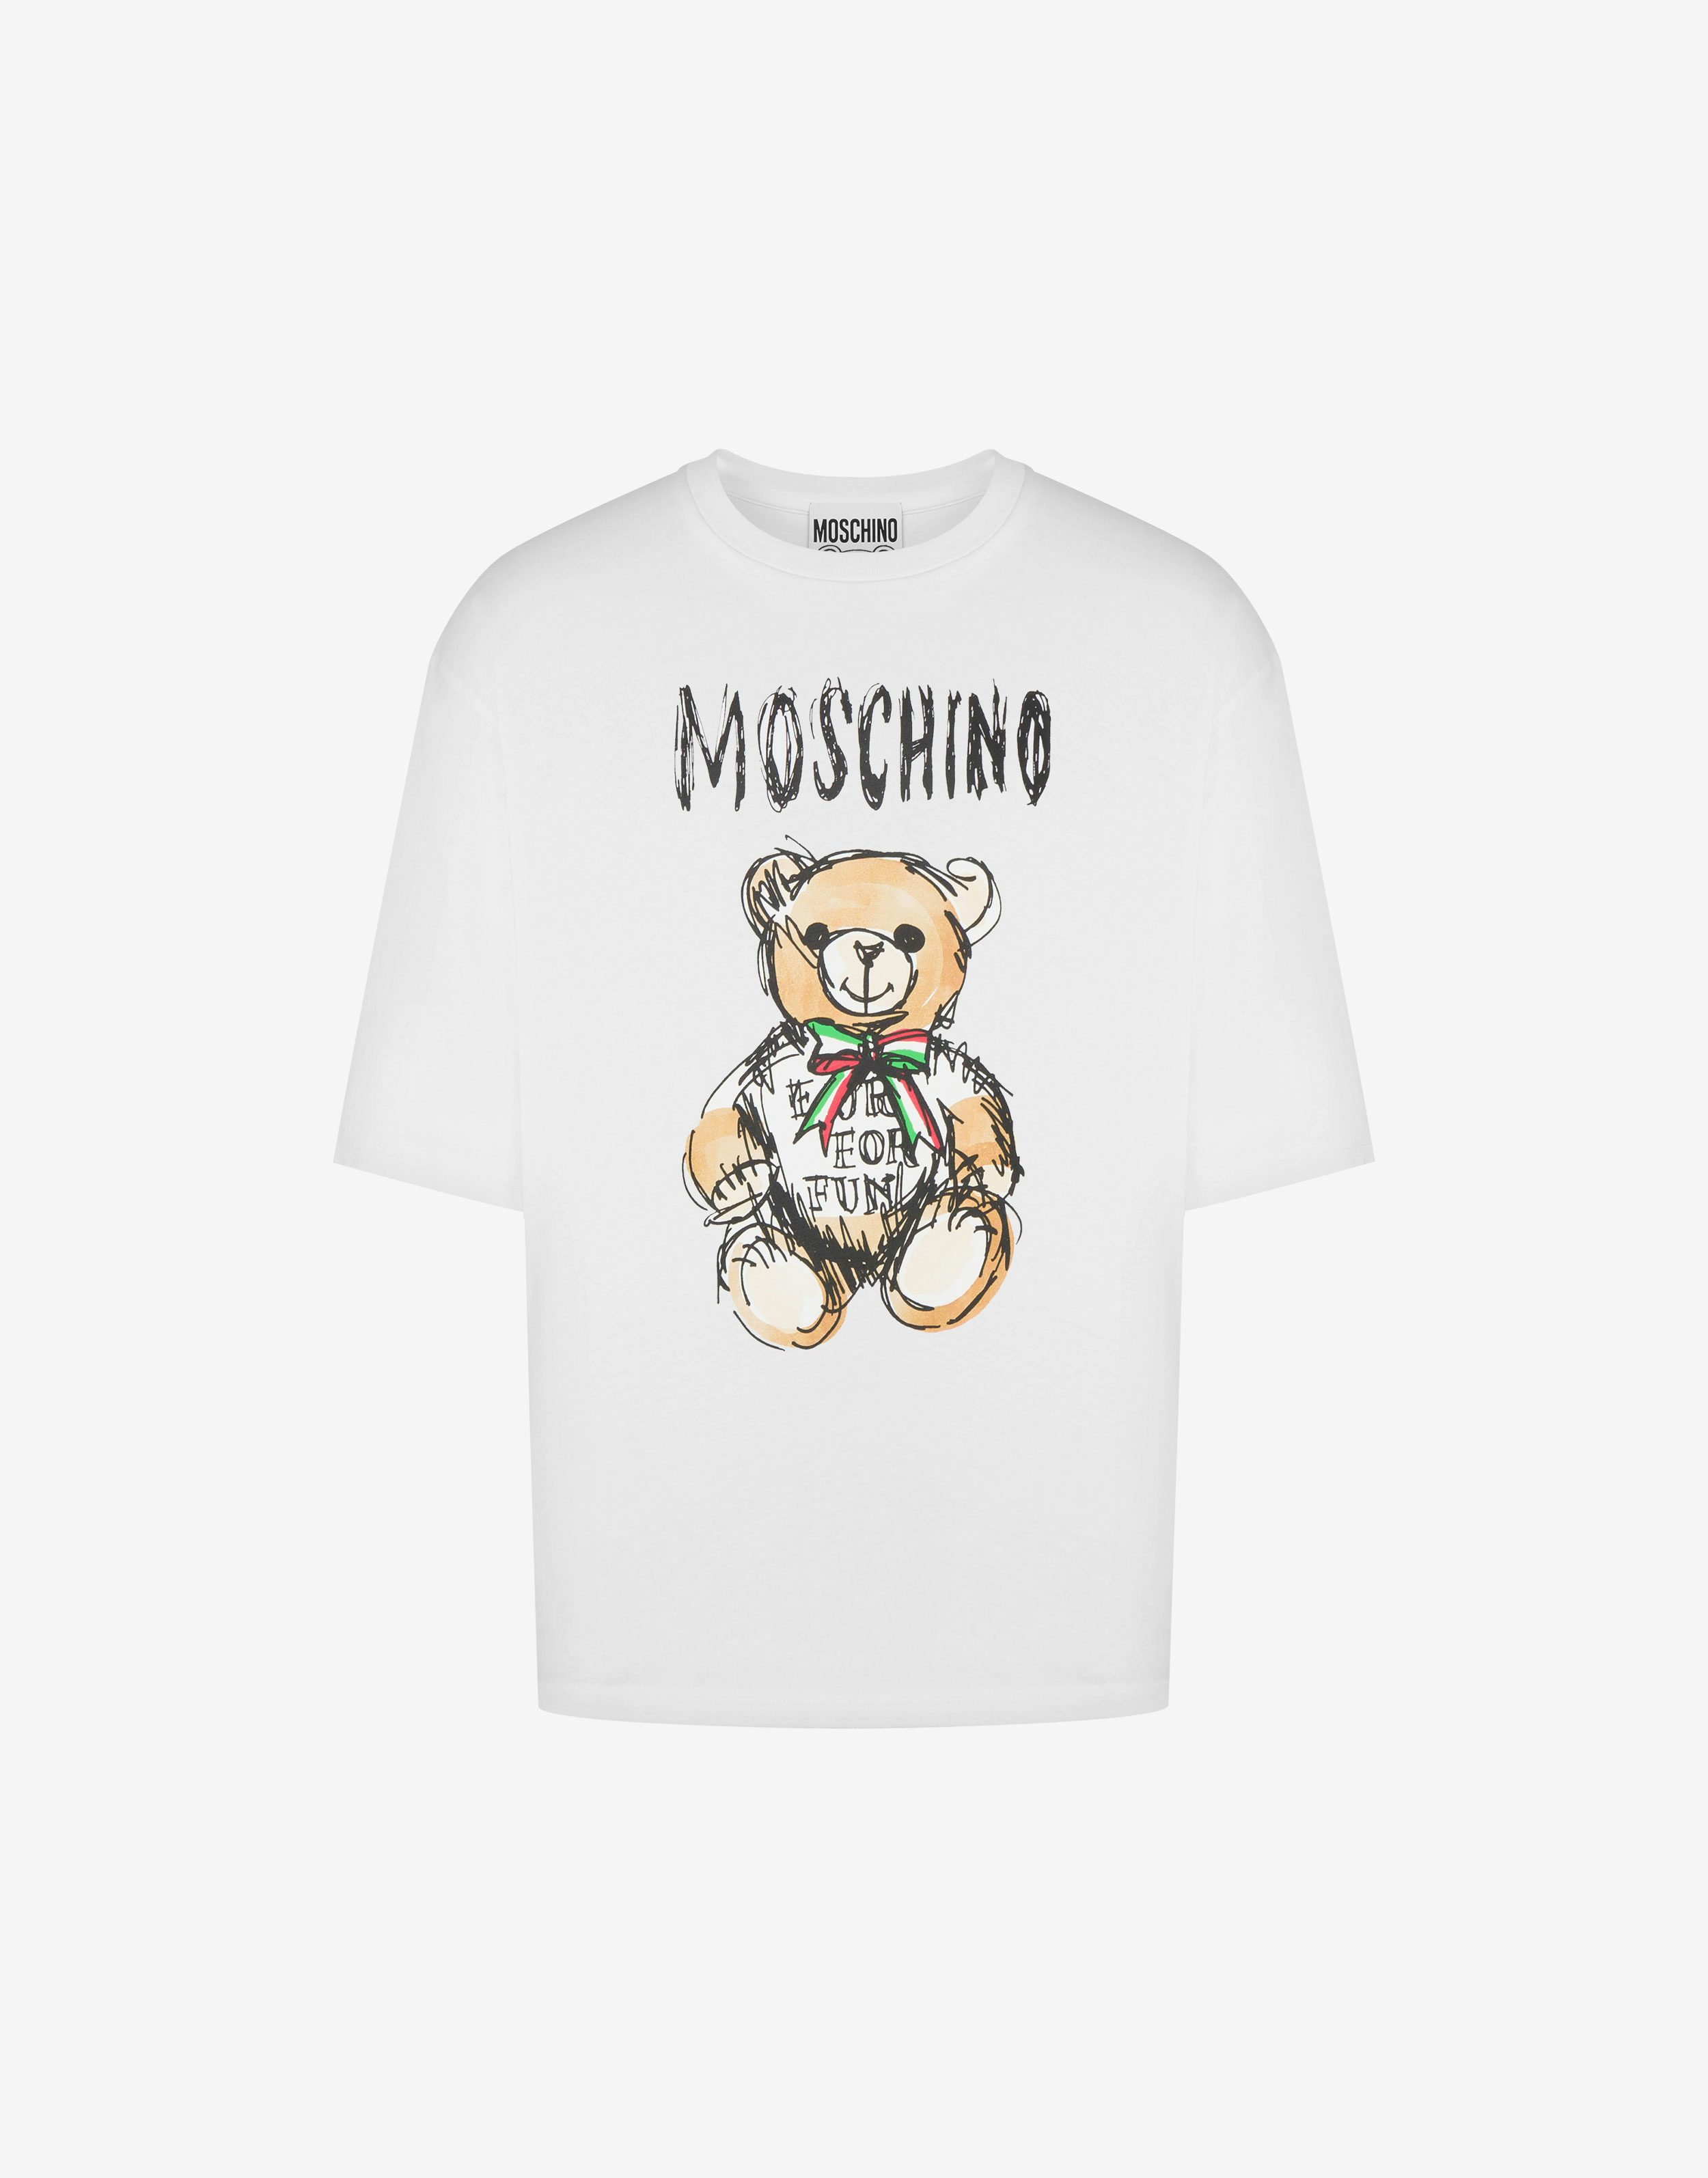 Moschino t-shirt aus bio-jersey drawn teddy bear